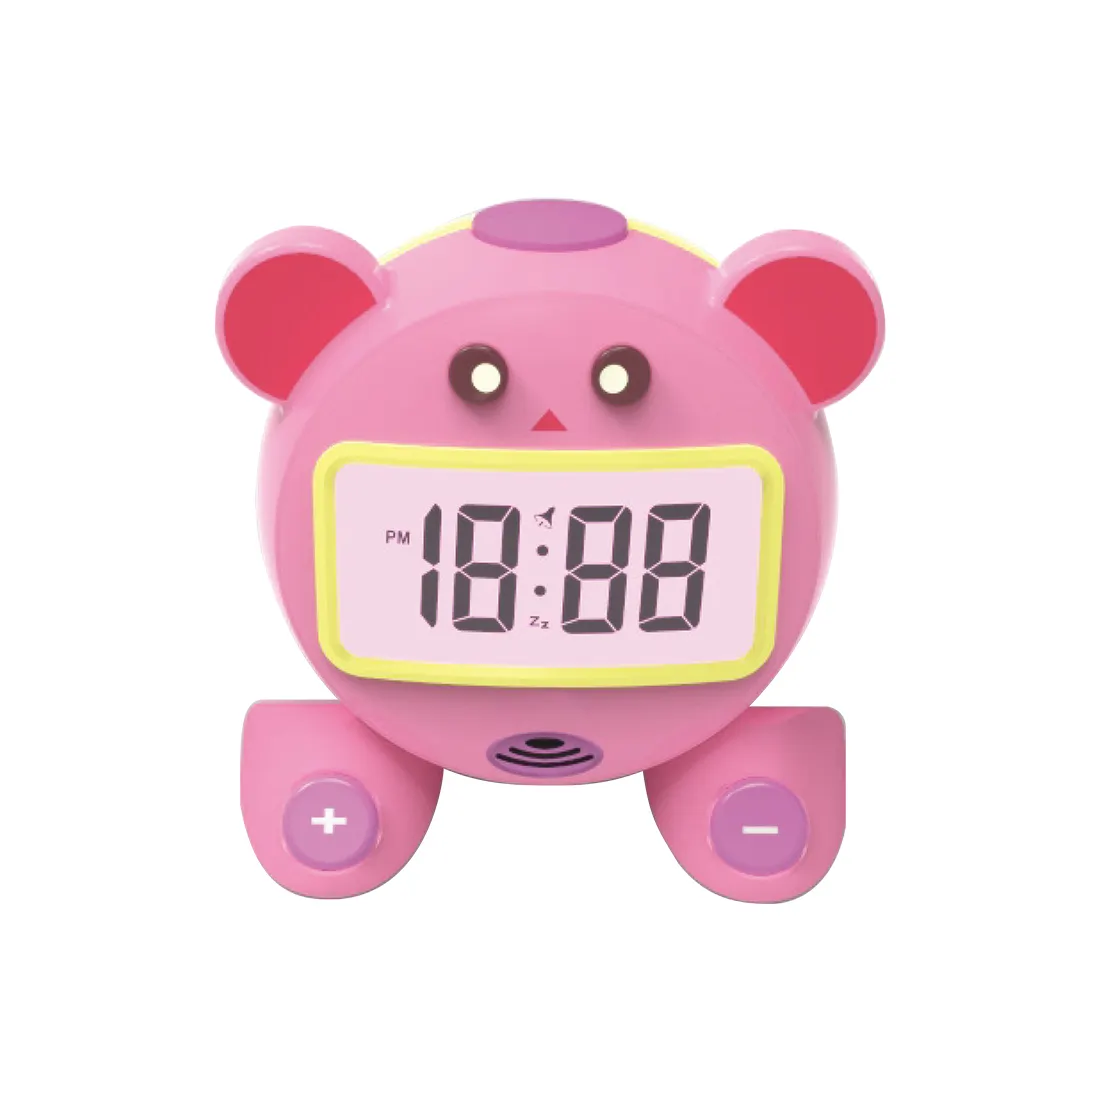 Modern new design cartoon children baby sleep training digital alarm clock toy clocks with sounds for toddlers clock